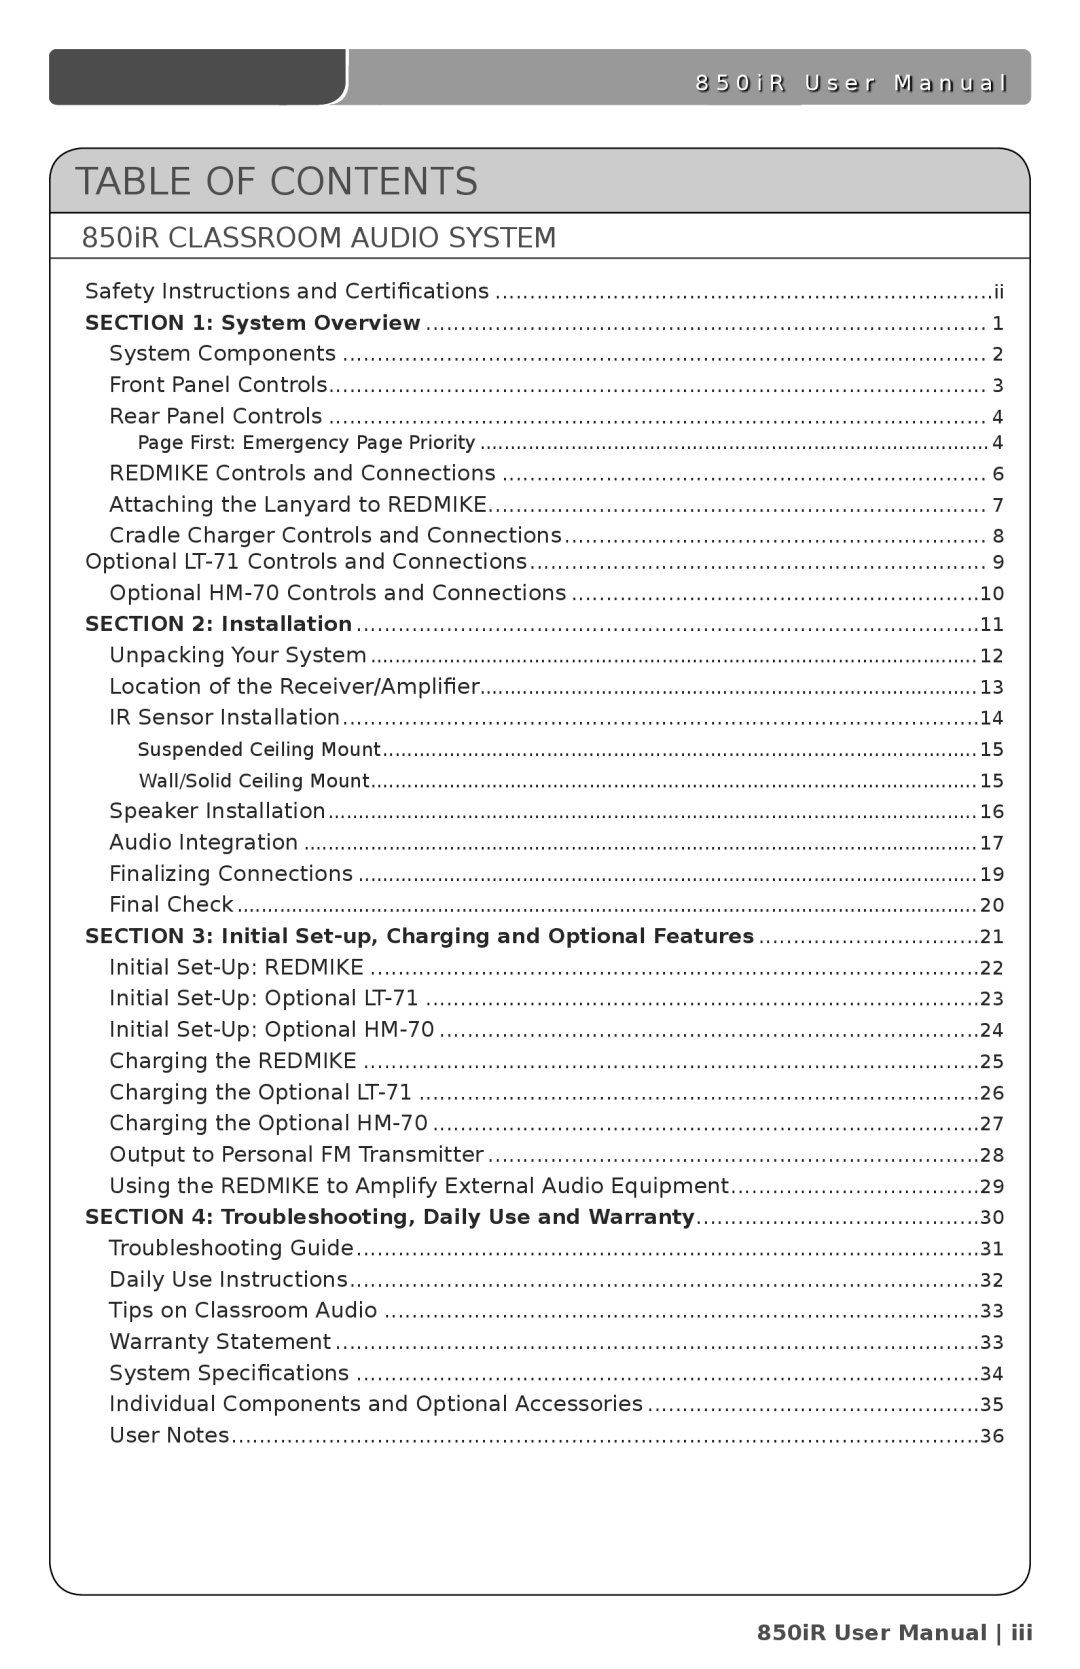 LightSpeed Technologies user manual Table Of Contents, 850iR CLASSROOM AUDIO SYSTEM, 8 5 0 i R U s e r M a n u a l 